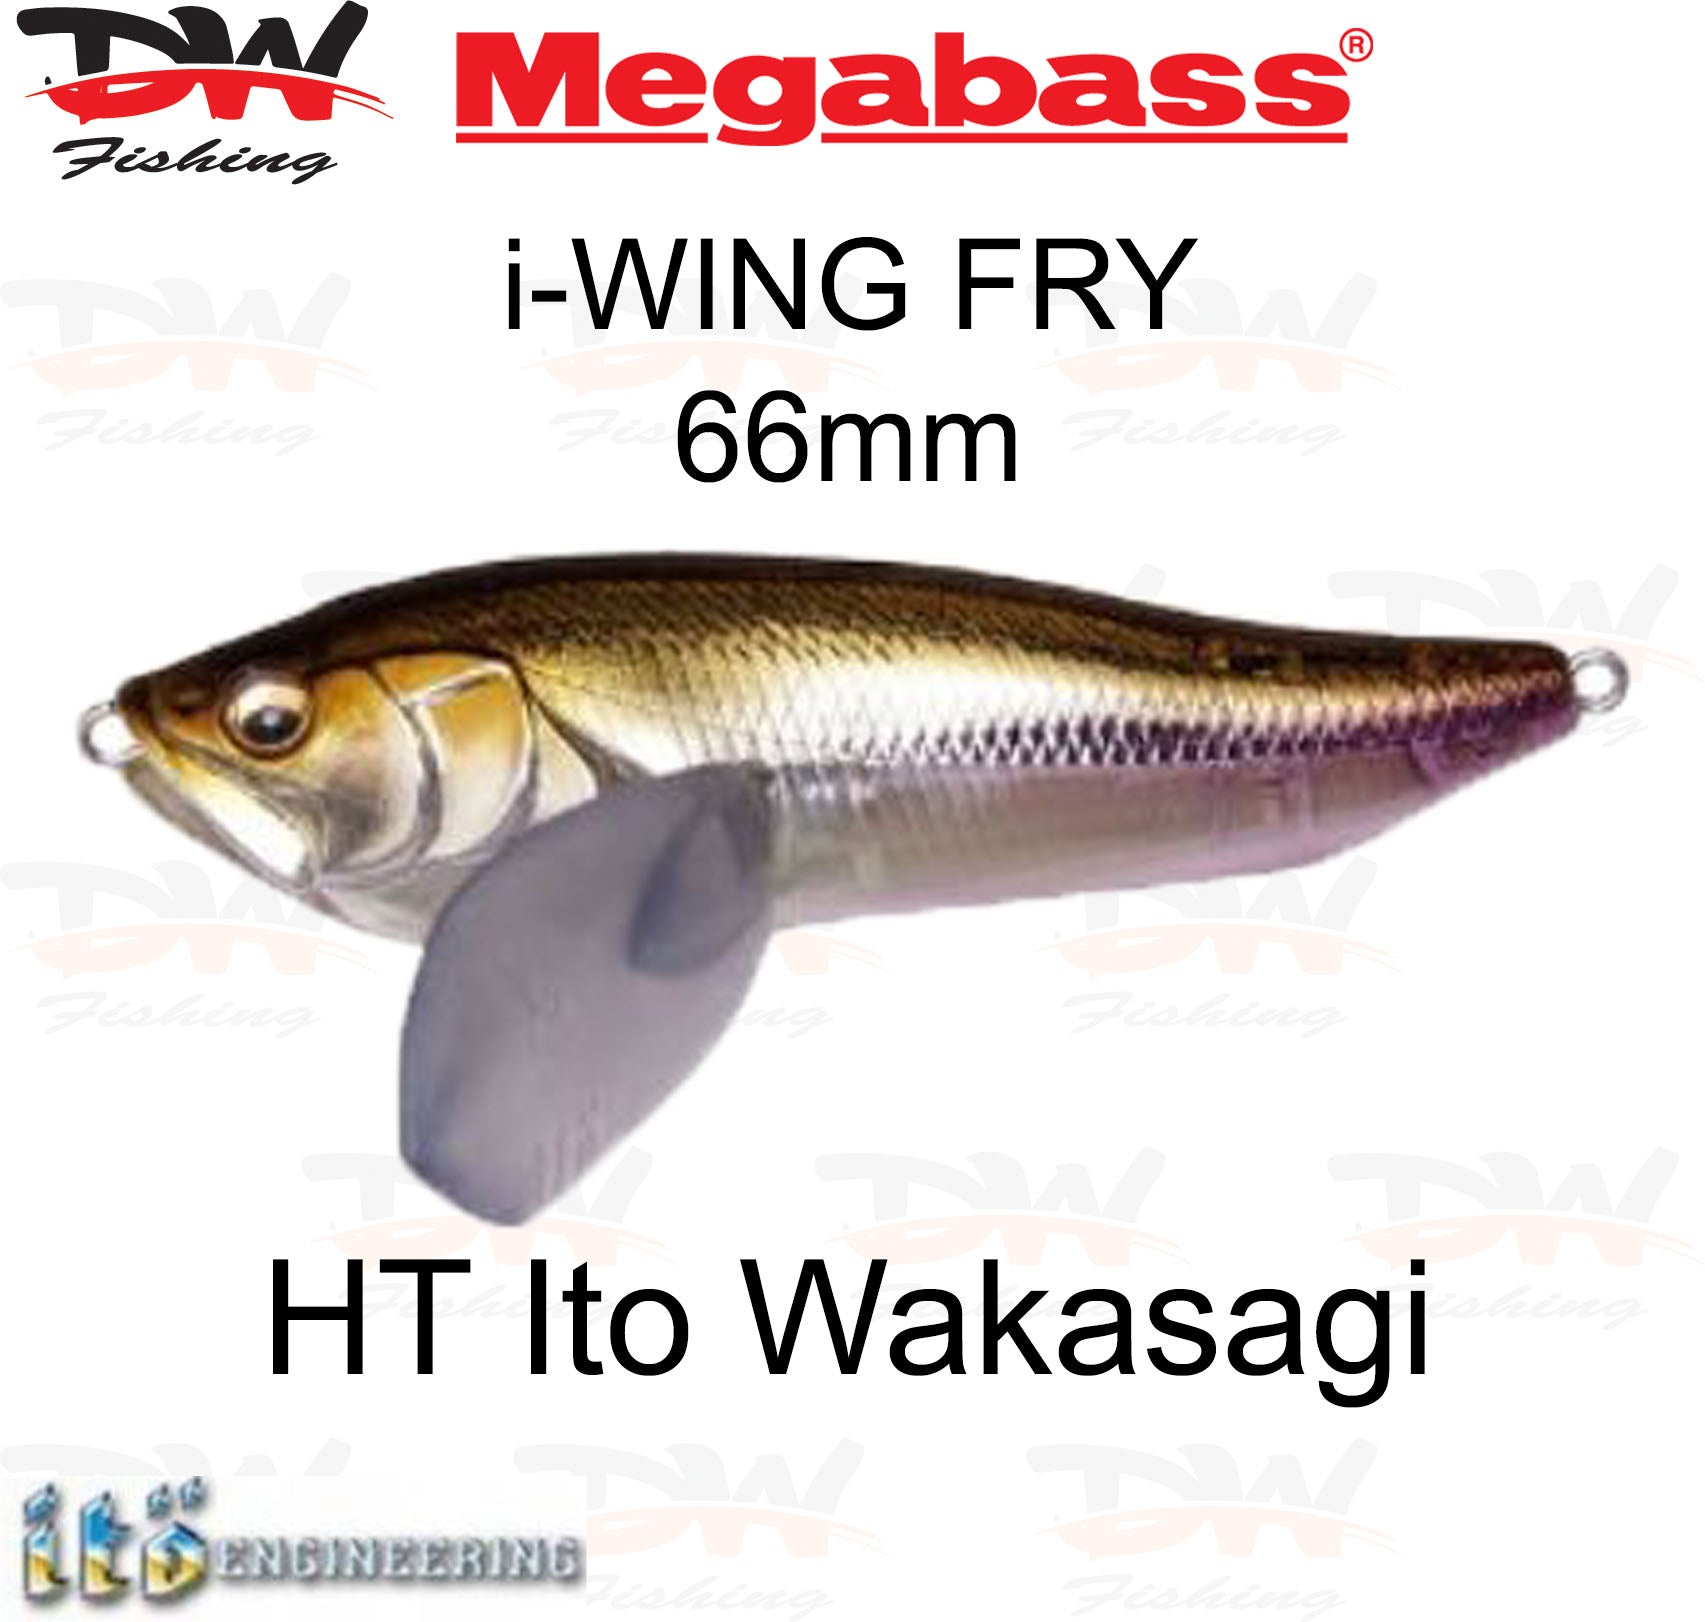 Megabass i-WING FRY surface lure single colour HT Ito Wakasagi